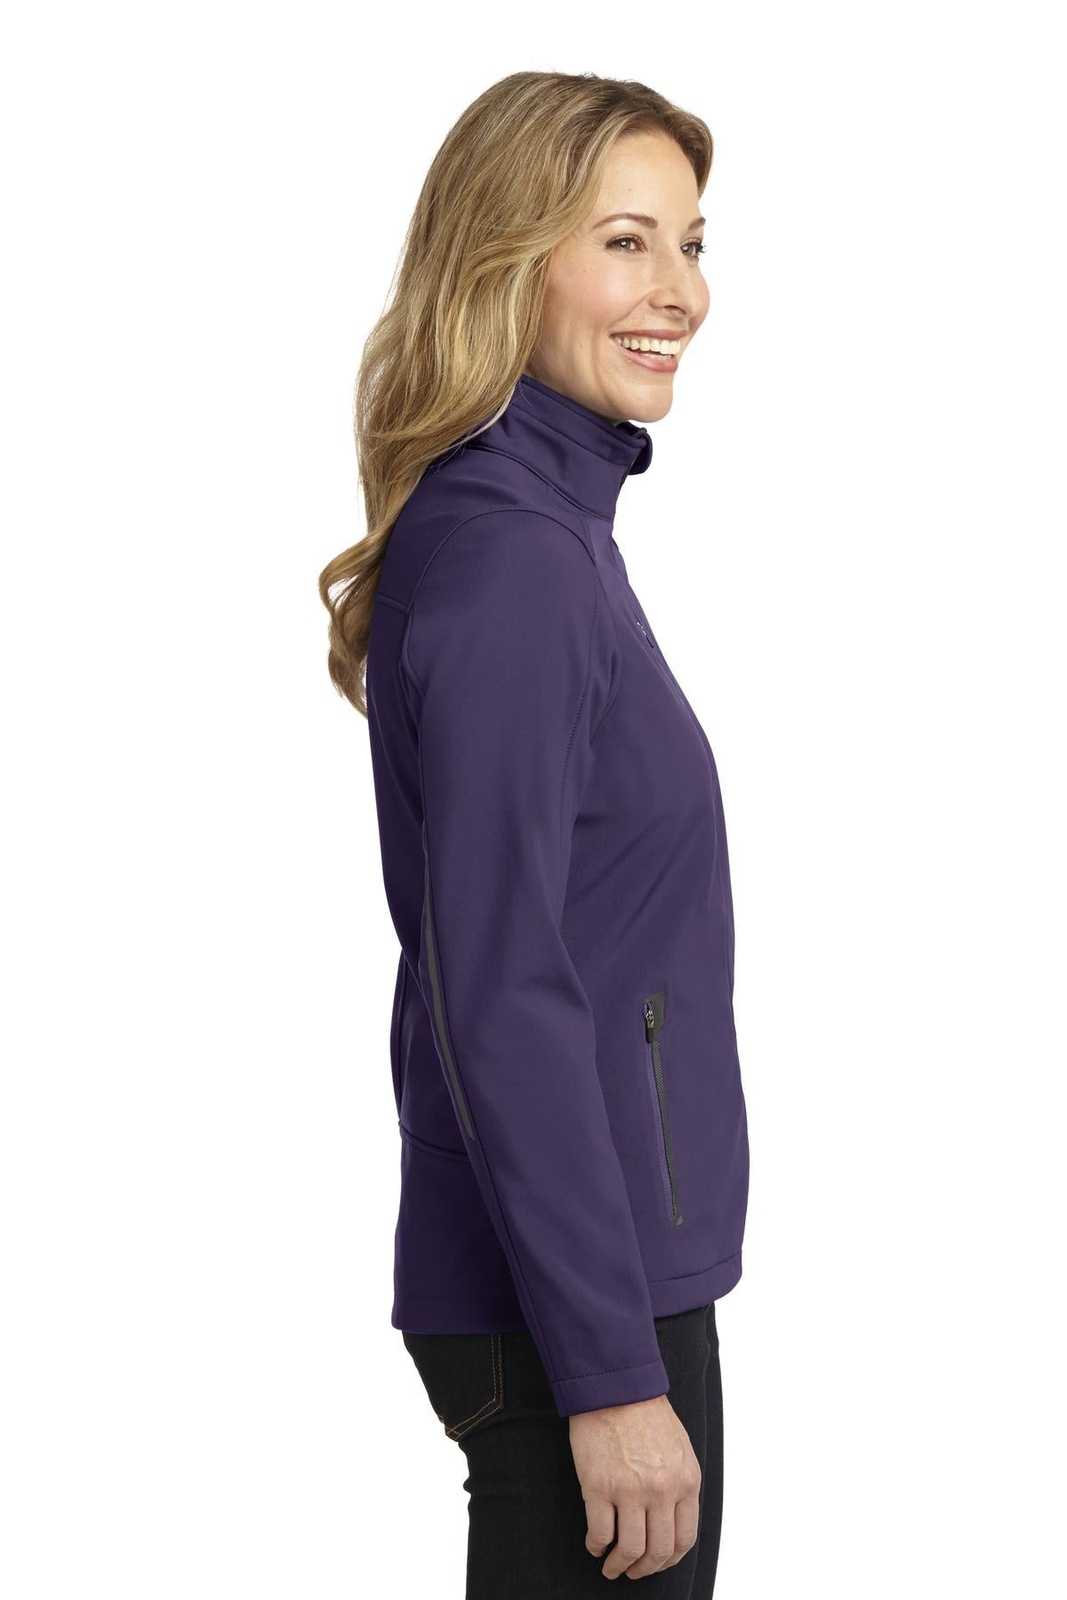 Port Authority L324 Ladies Welded Soft Shell Jacket - Posh Purple - HIT a Double - 3